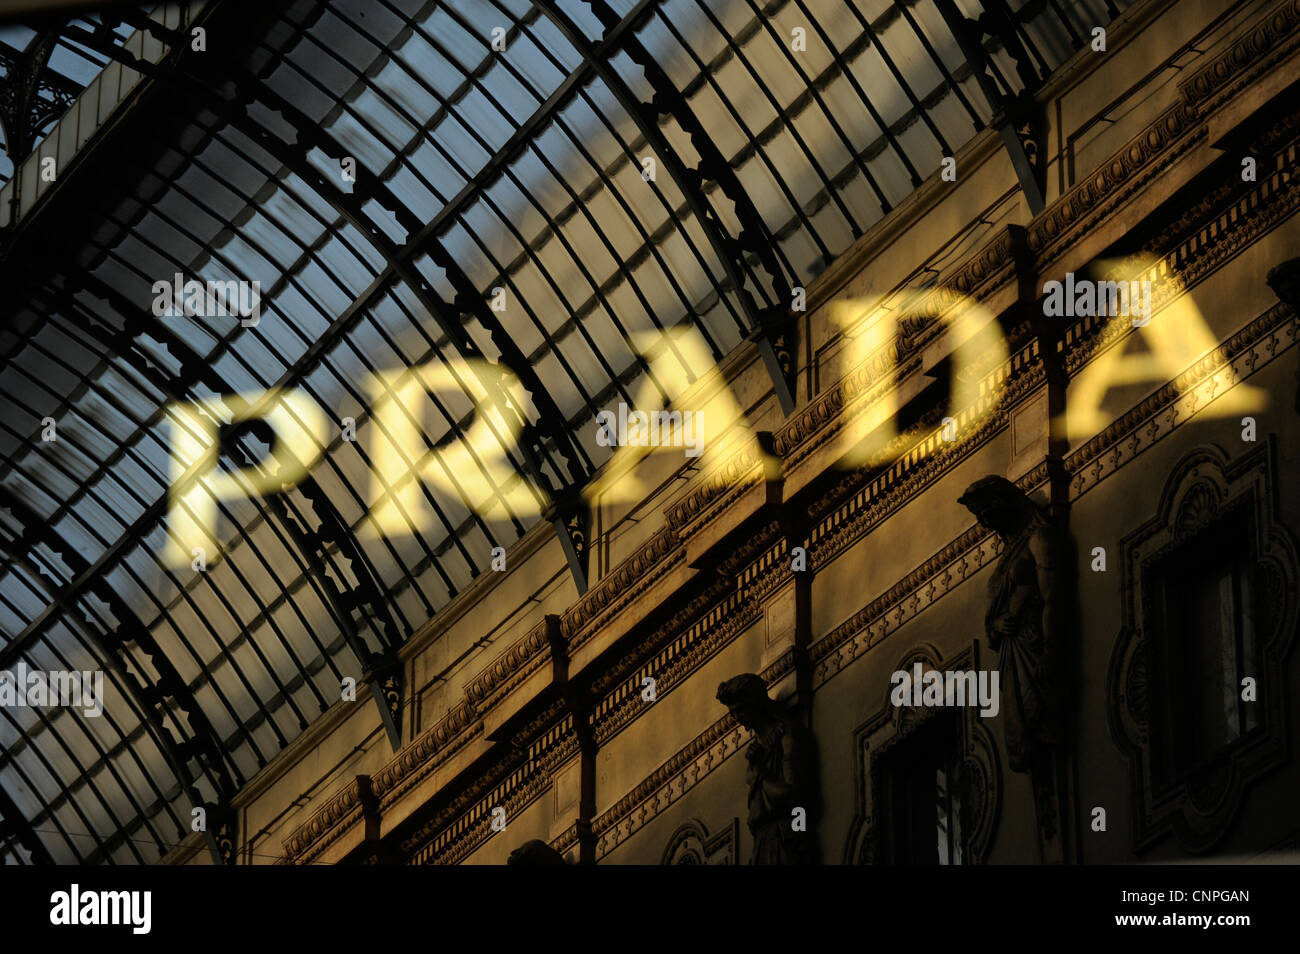 Prada shop. Galleria Vittorio Emanuele II. Milan, Italy Stock Photo